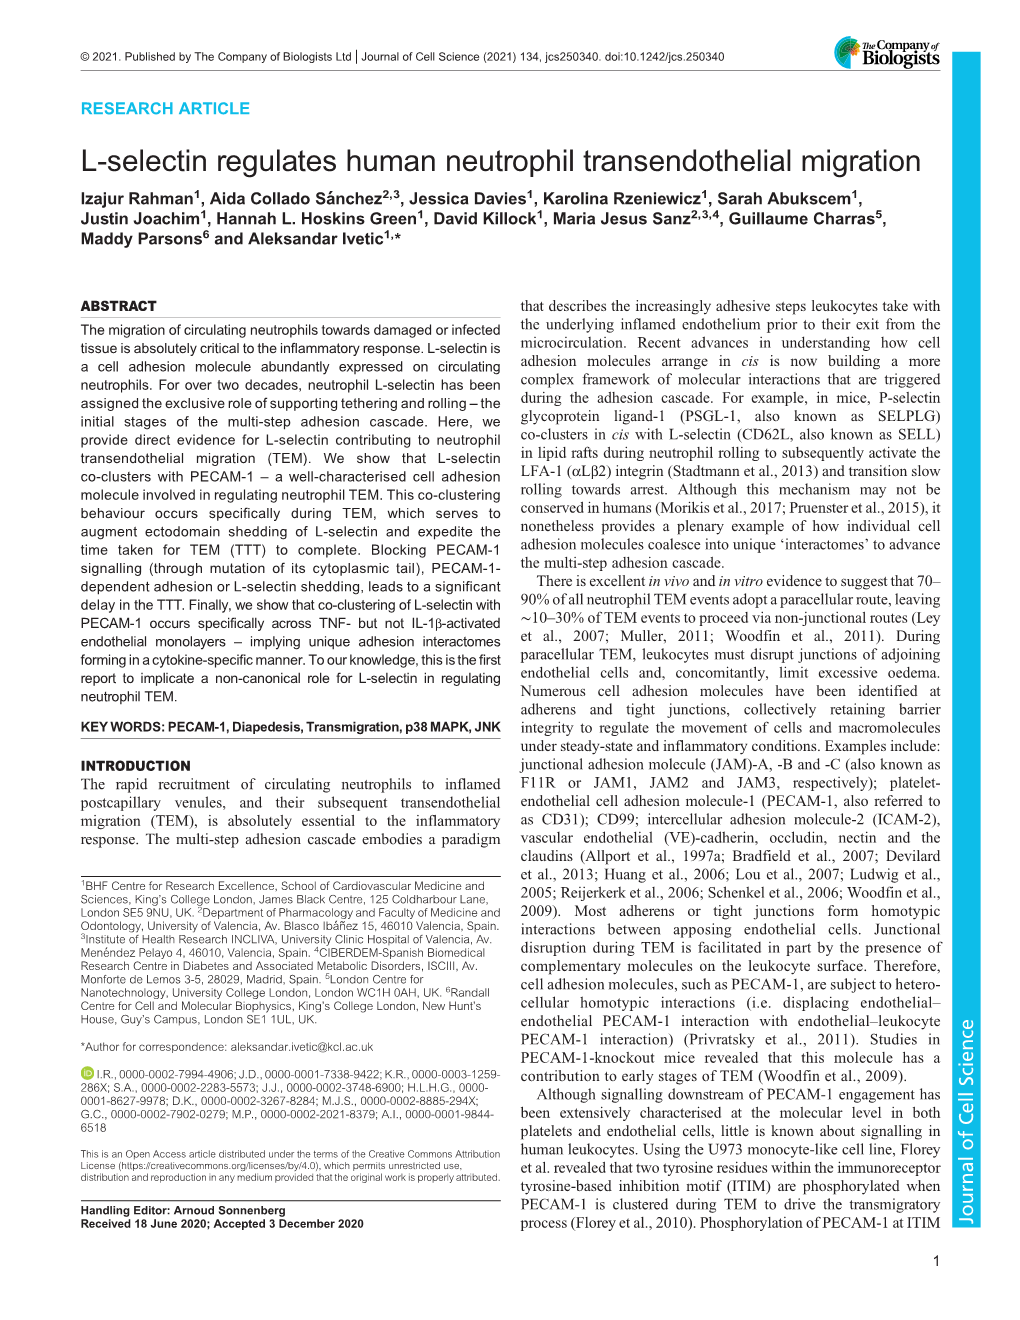 L-Selectin Regulates Human Neutrophil Transendothelial Migration